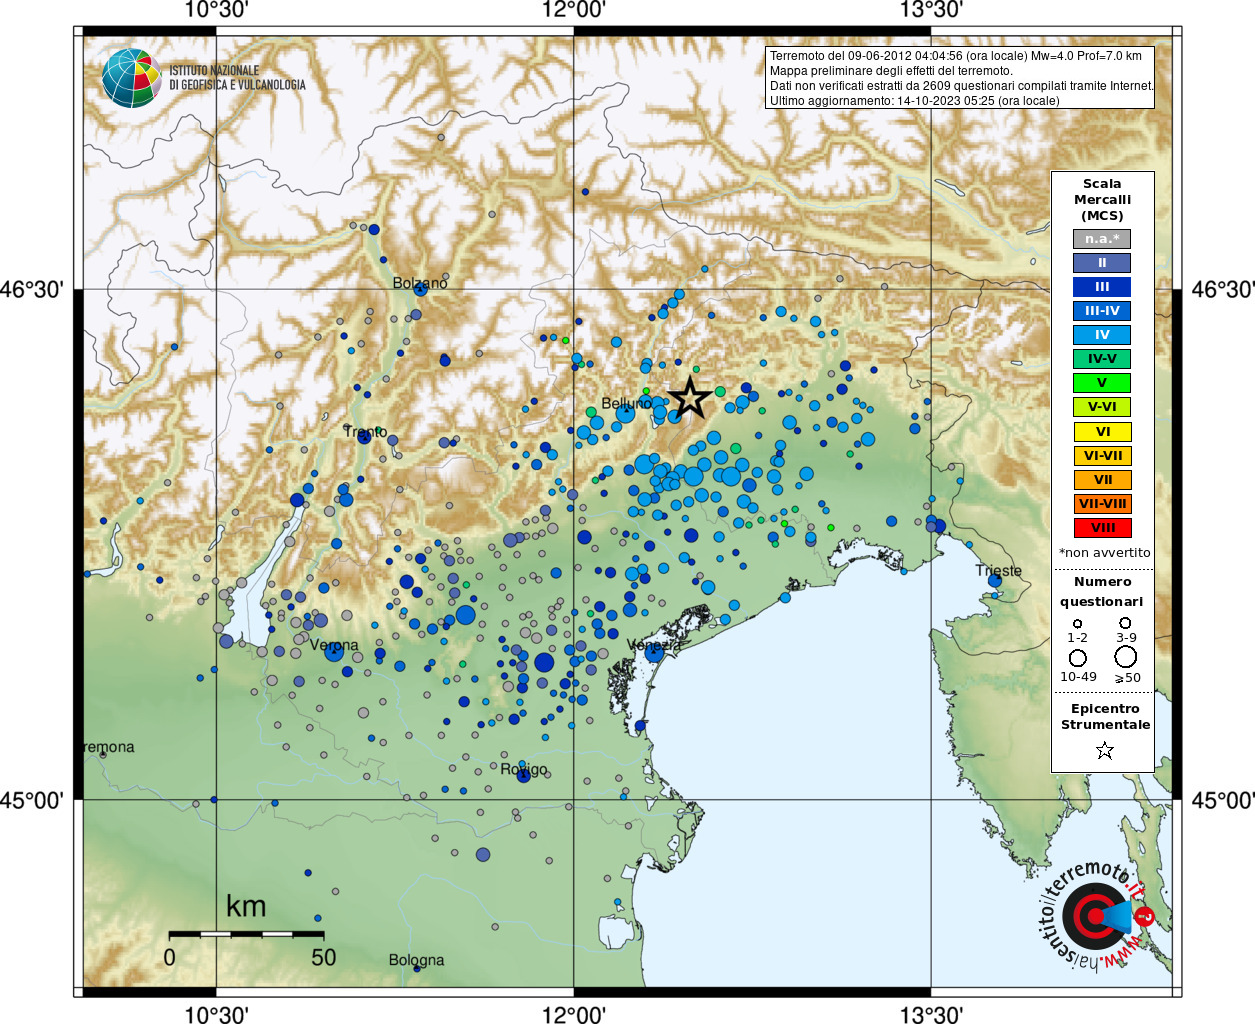 Earthquake 6 km W Barcis (PN), Magnitude Mw 4.0, 9 June 2012 time 04:04:56 (Timezone ...